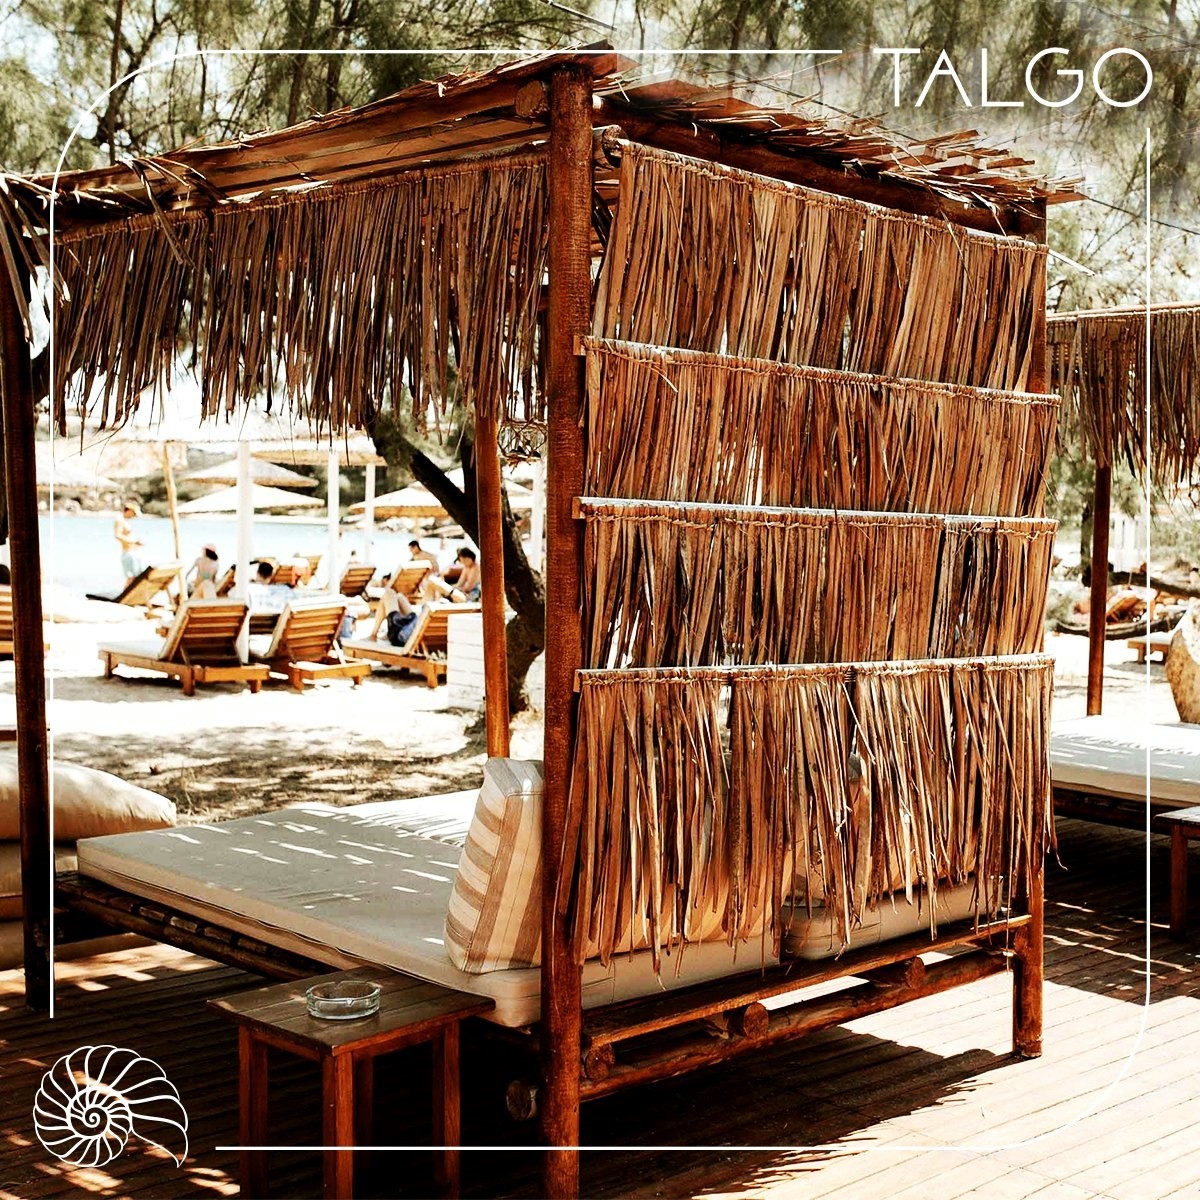 talgo-beach-bar6.jpg